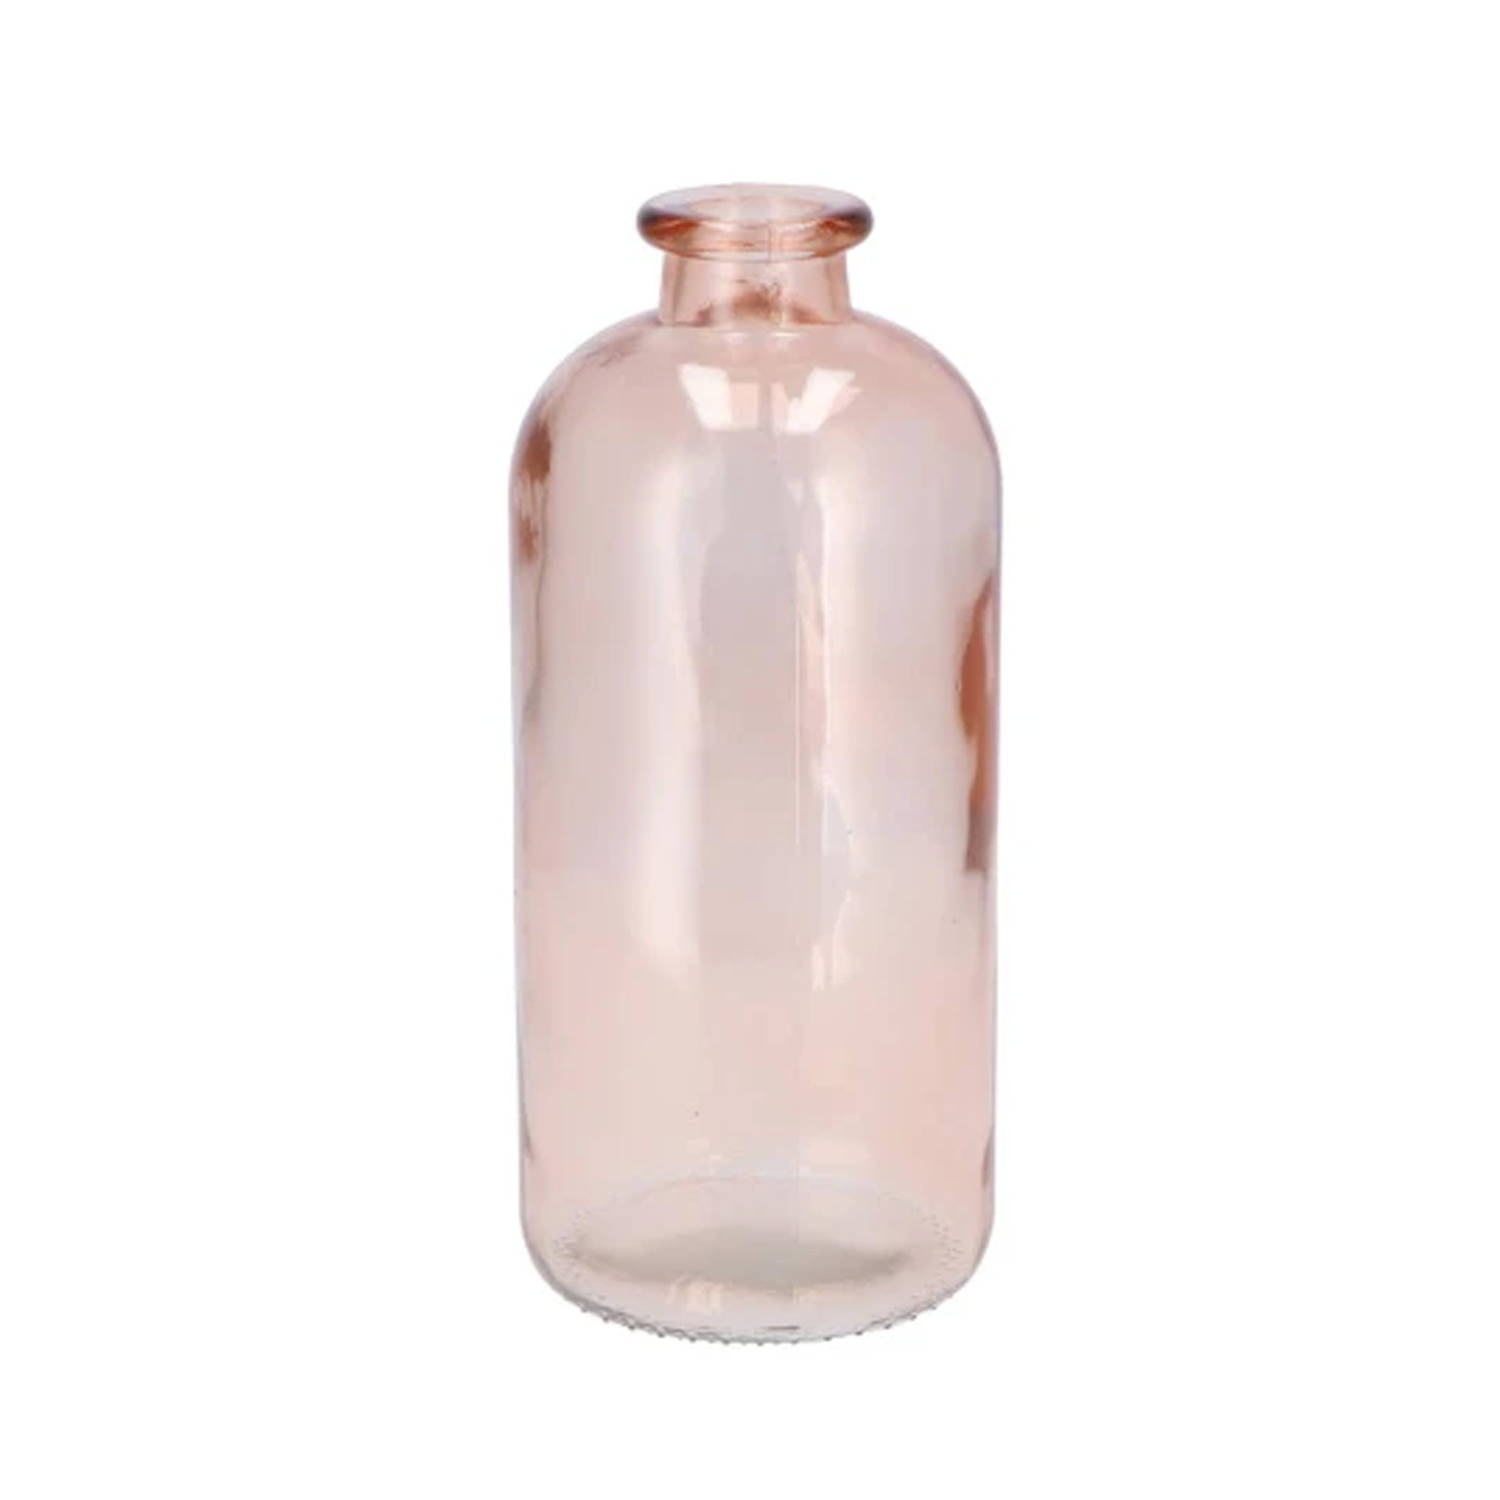 DK Design Bloemenvaas fles model - helder gekleurd glas - perzik roze - D11 x H25 cm